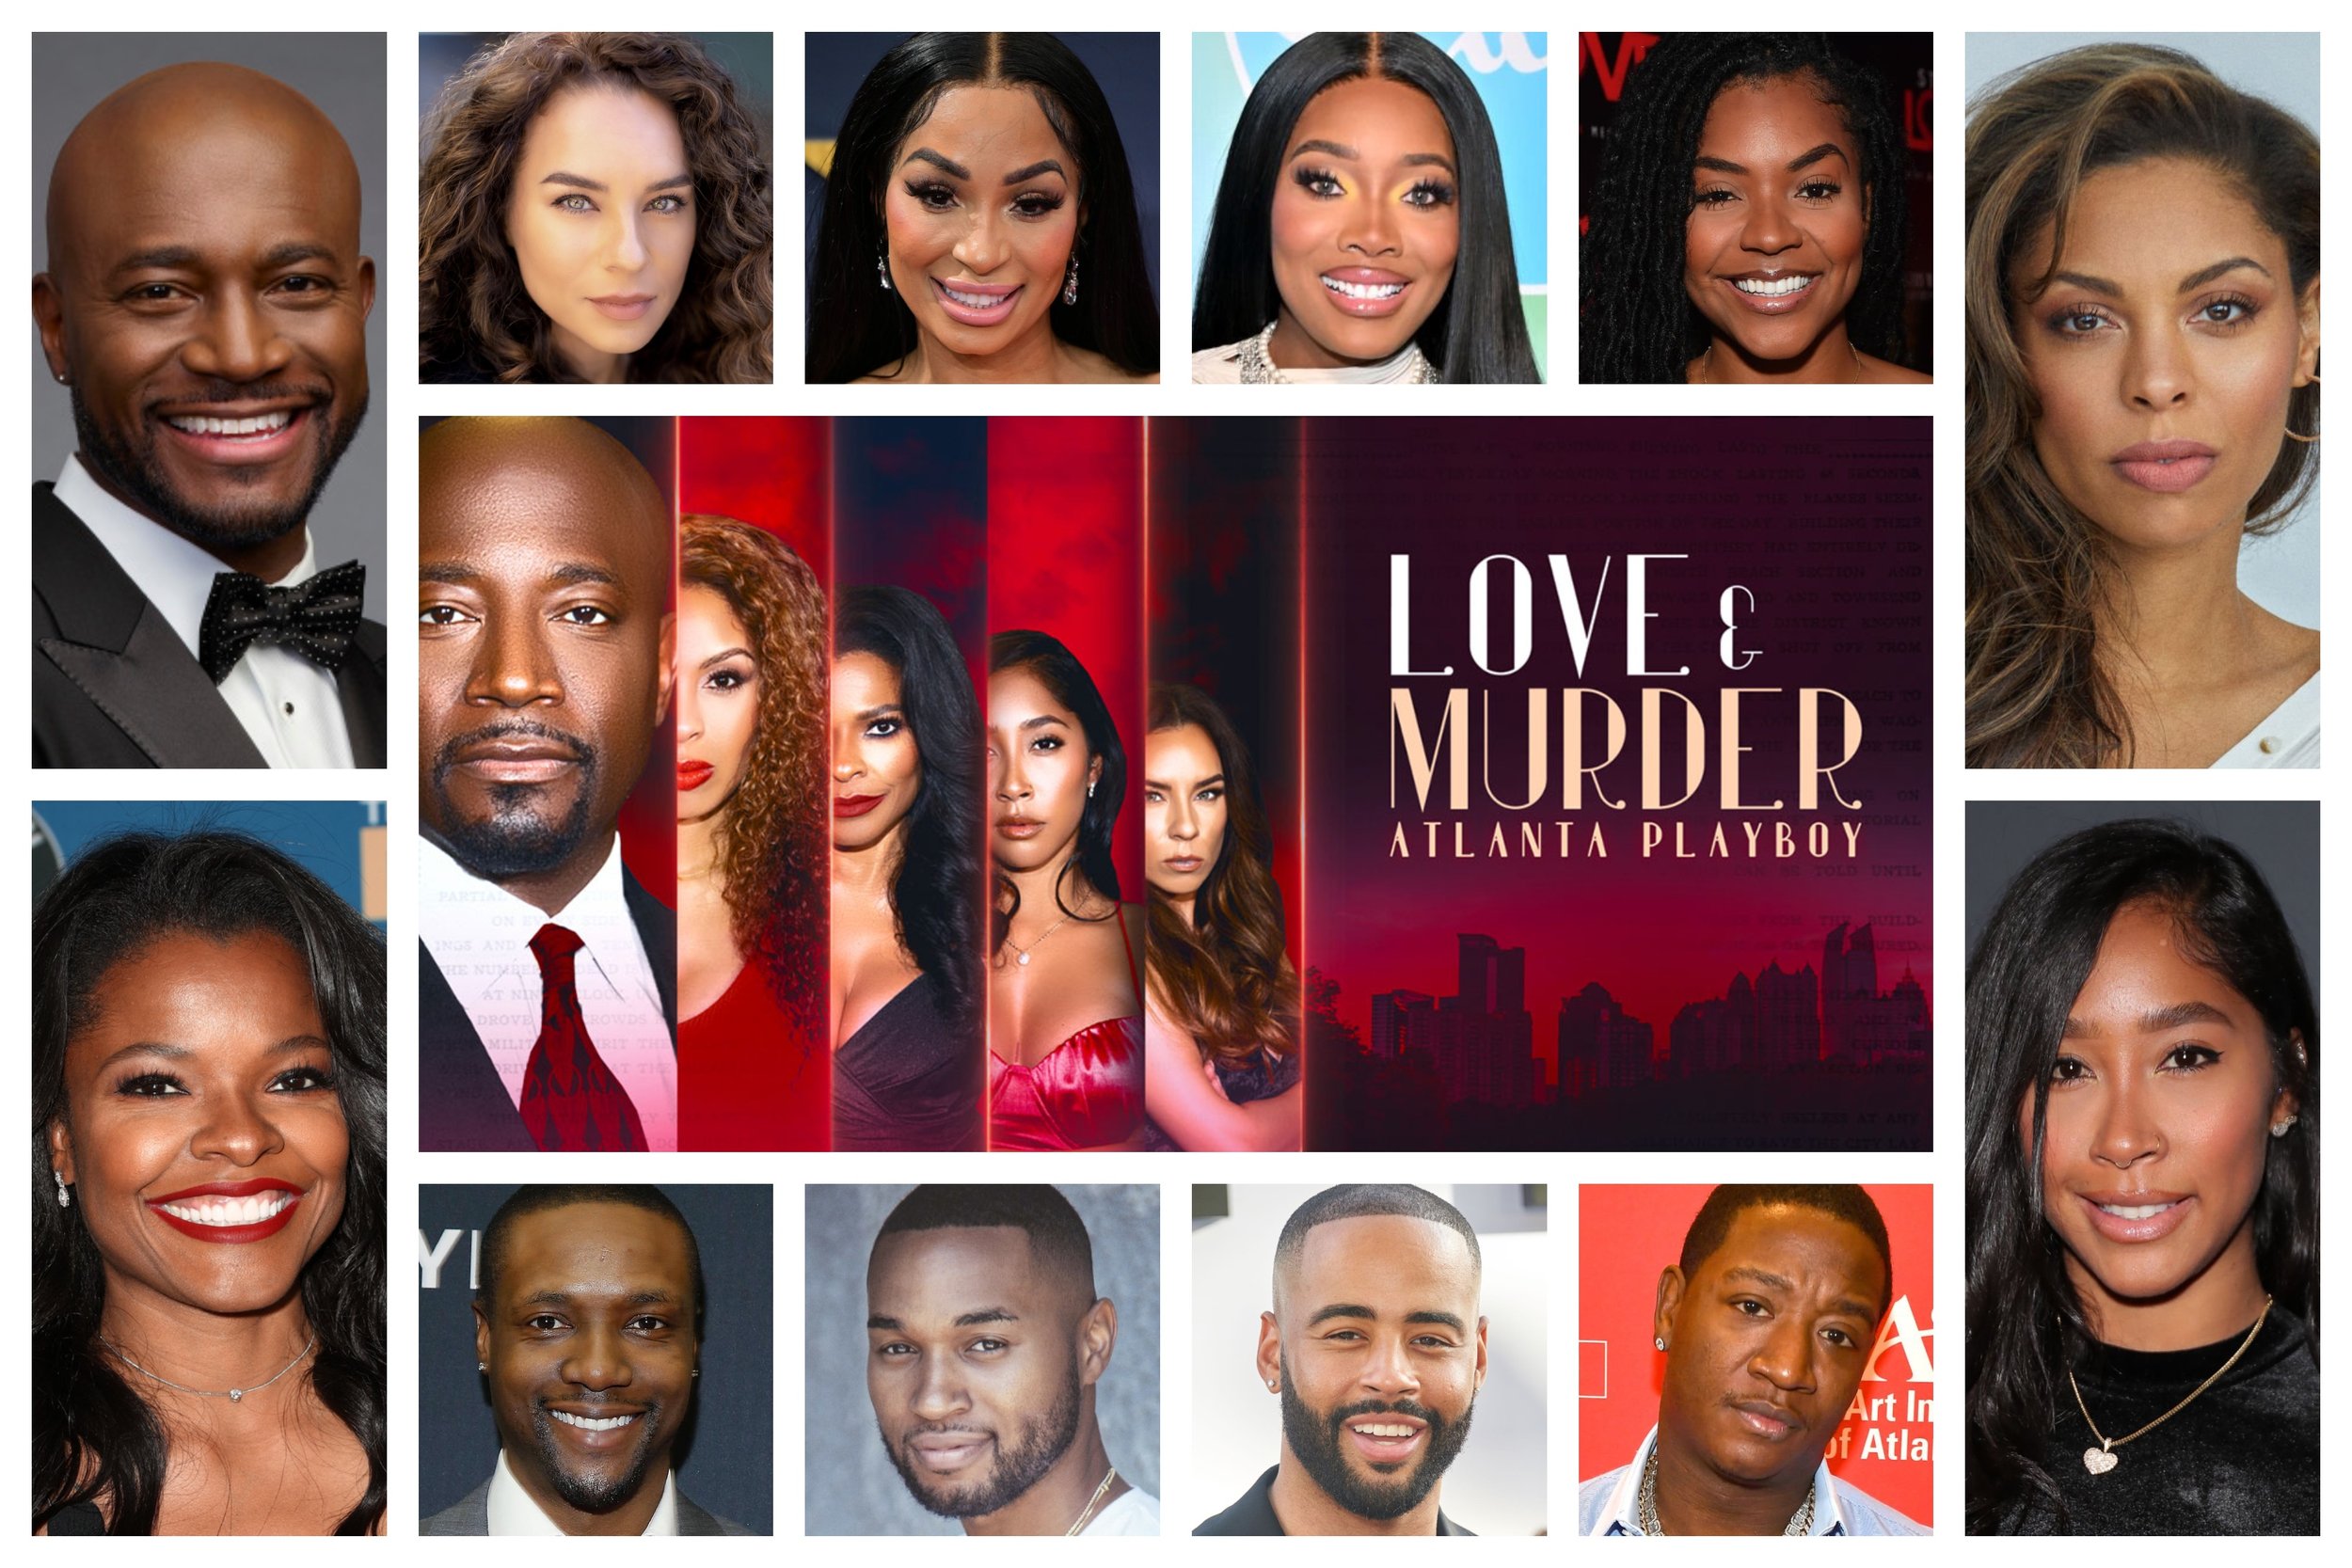 Love and Murder Atlanta Playboy cast.jpg